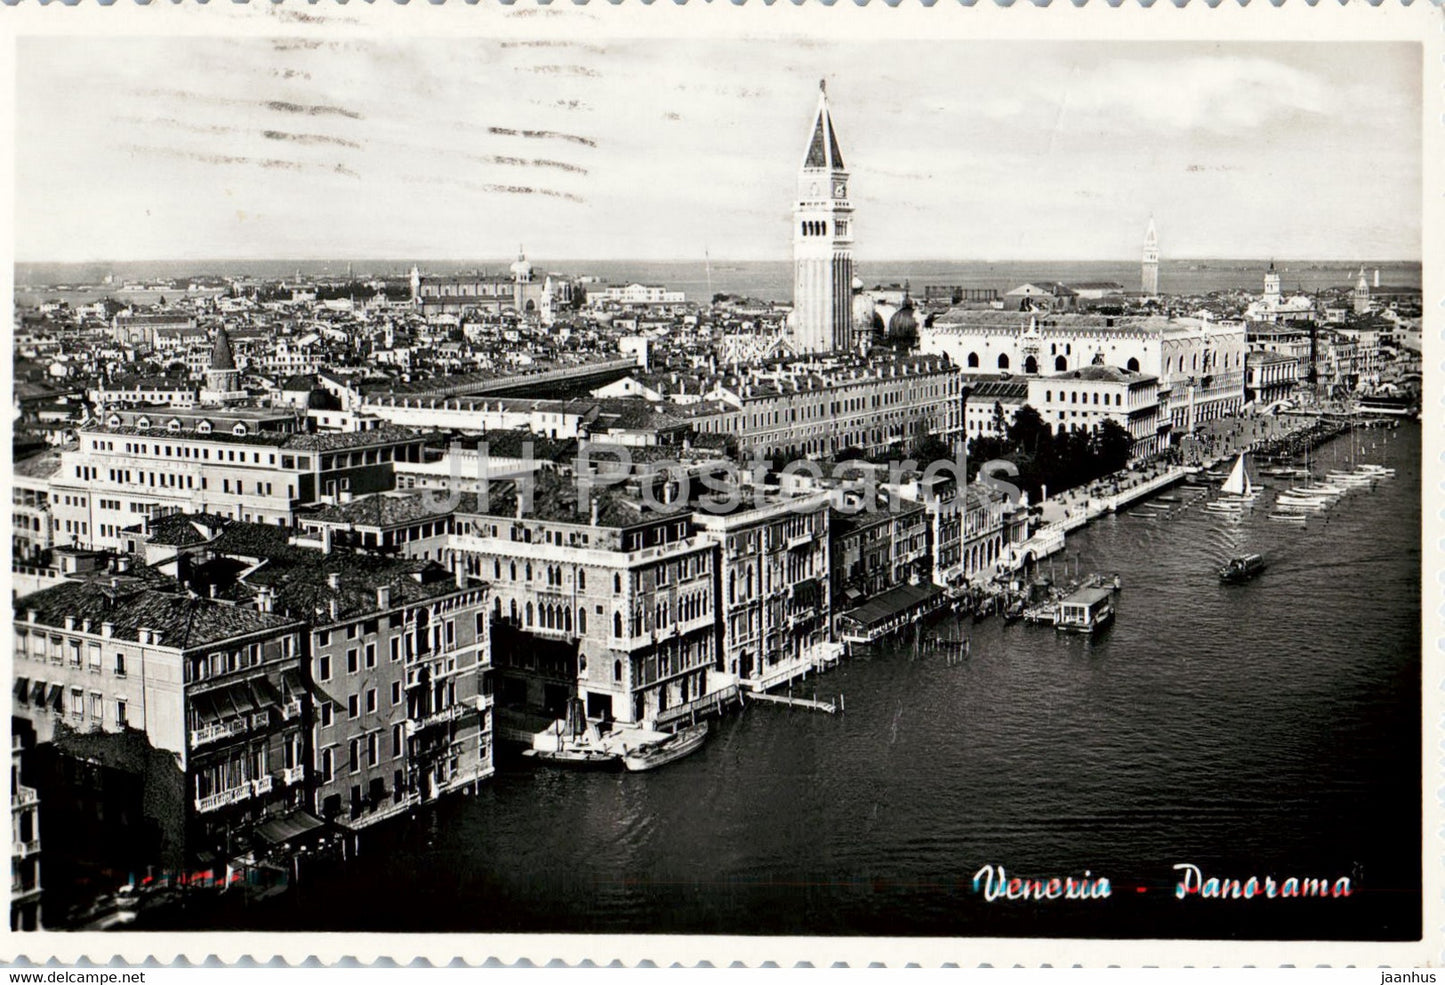 Venice - Venezia - Panorama - old postcard - Italy - used - JH Postcards